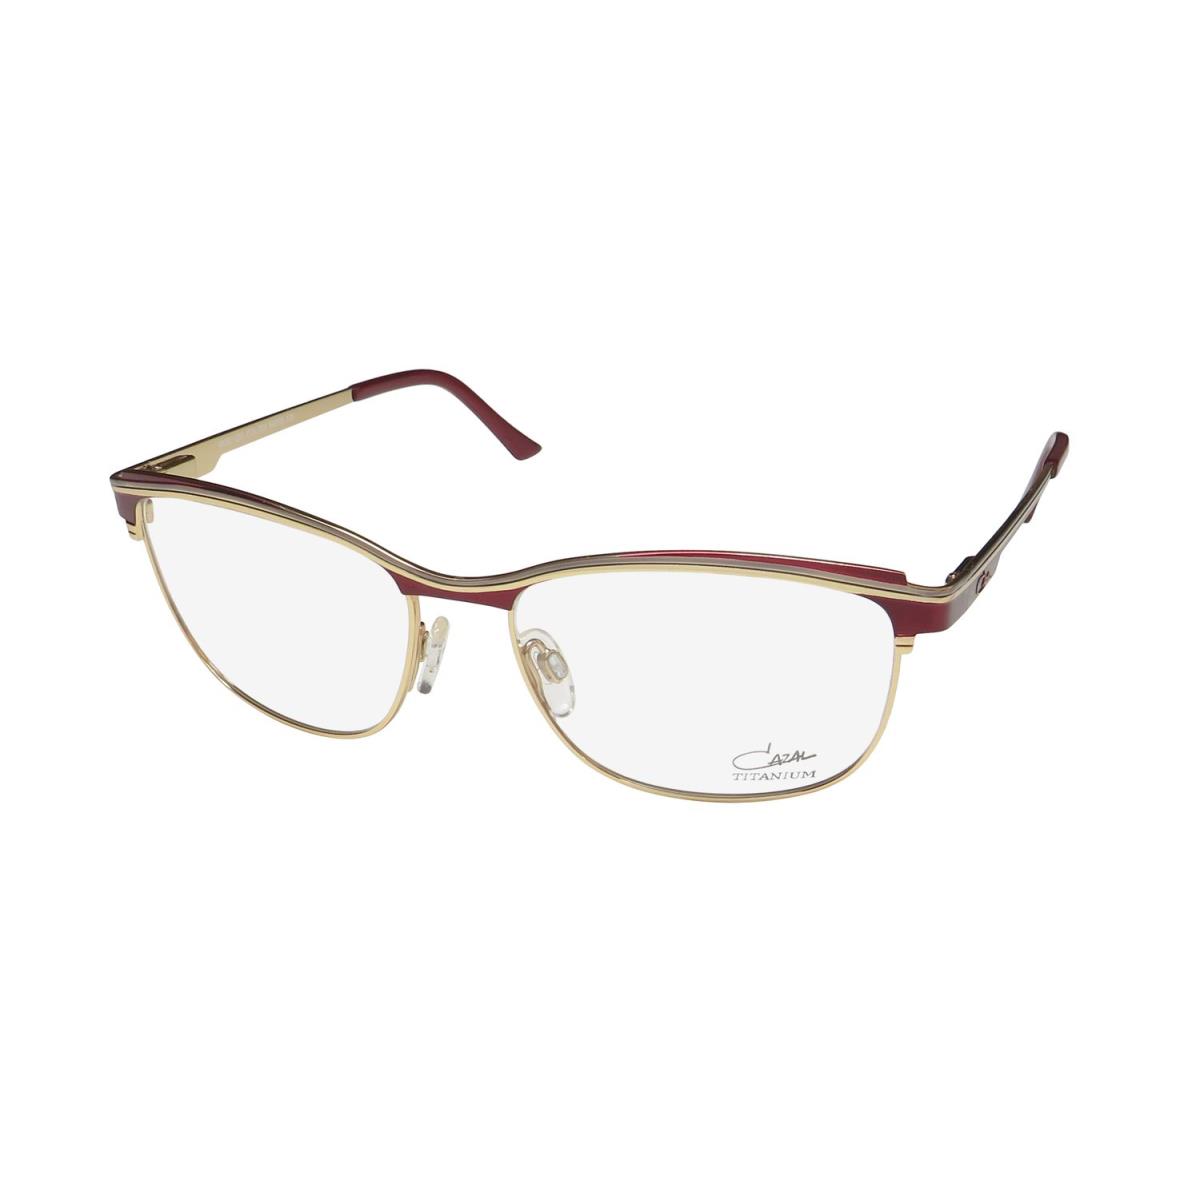 Cazal 1250 Titanium Imported From Germany Rare Eyeglass Frame/glasses Burgundy / Gold